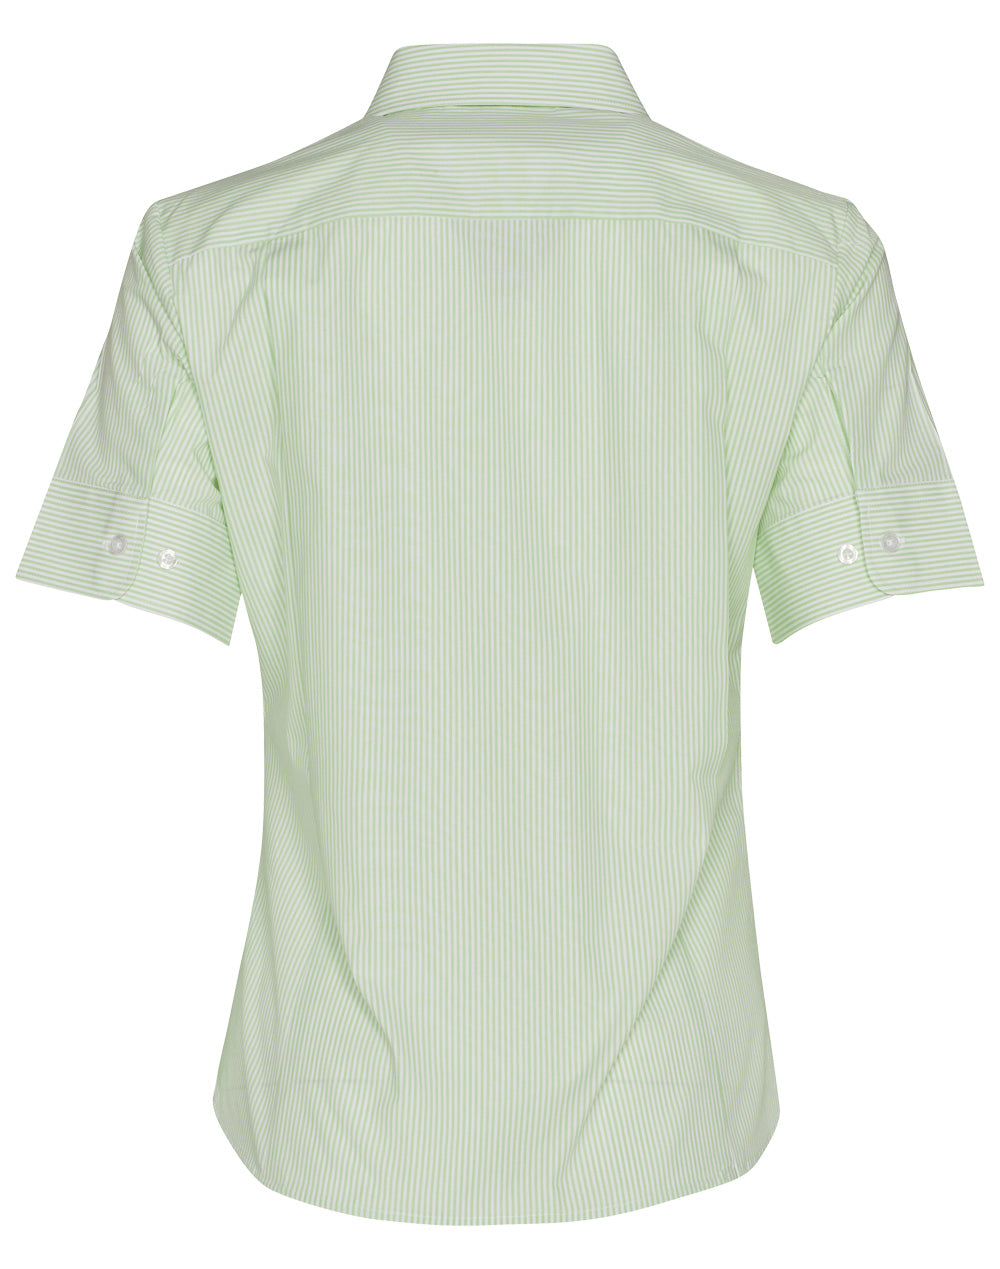 Benchmark M8234 Women's Balance Stripe Short Sleeve Shirt